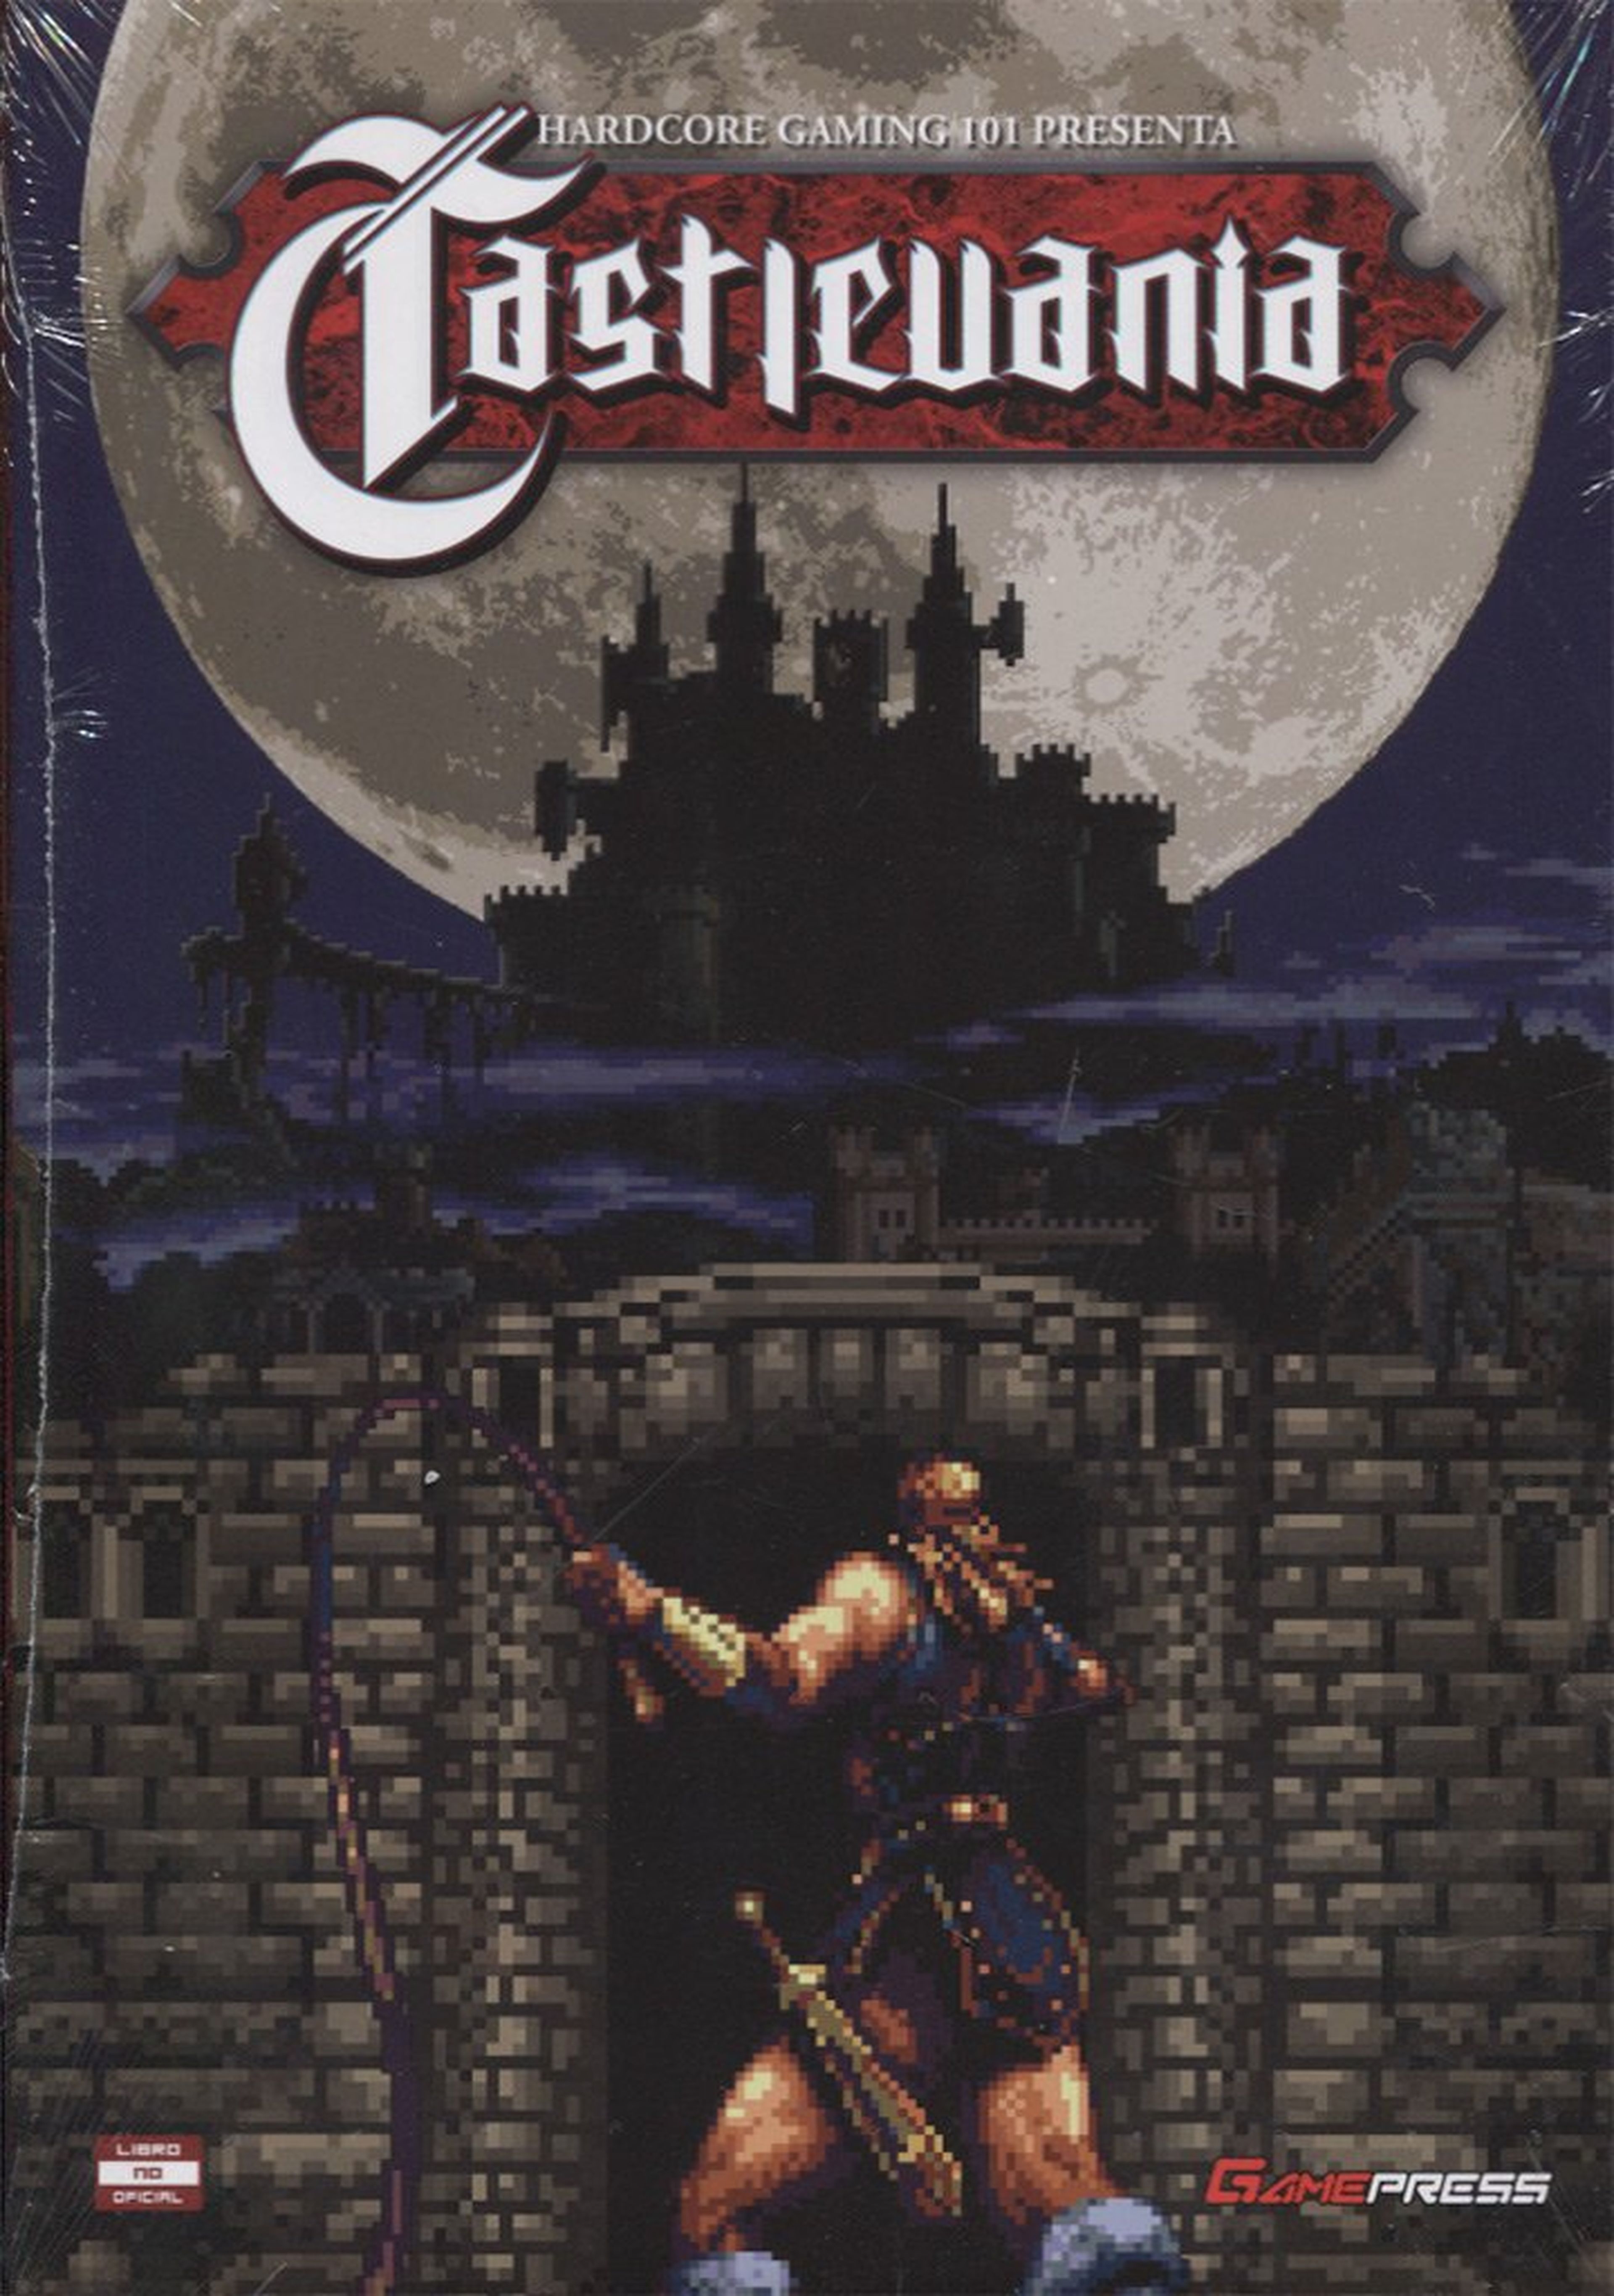 Hardcore Gaming 101 Presenta Castlevania